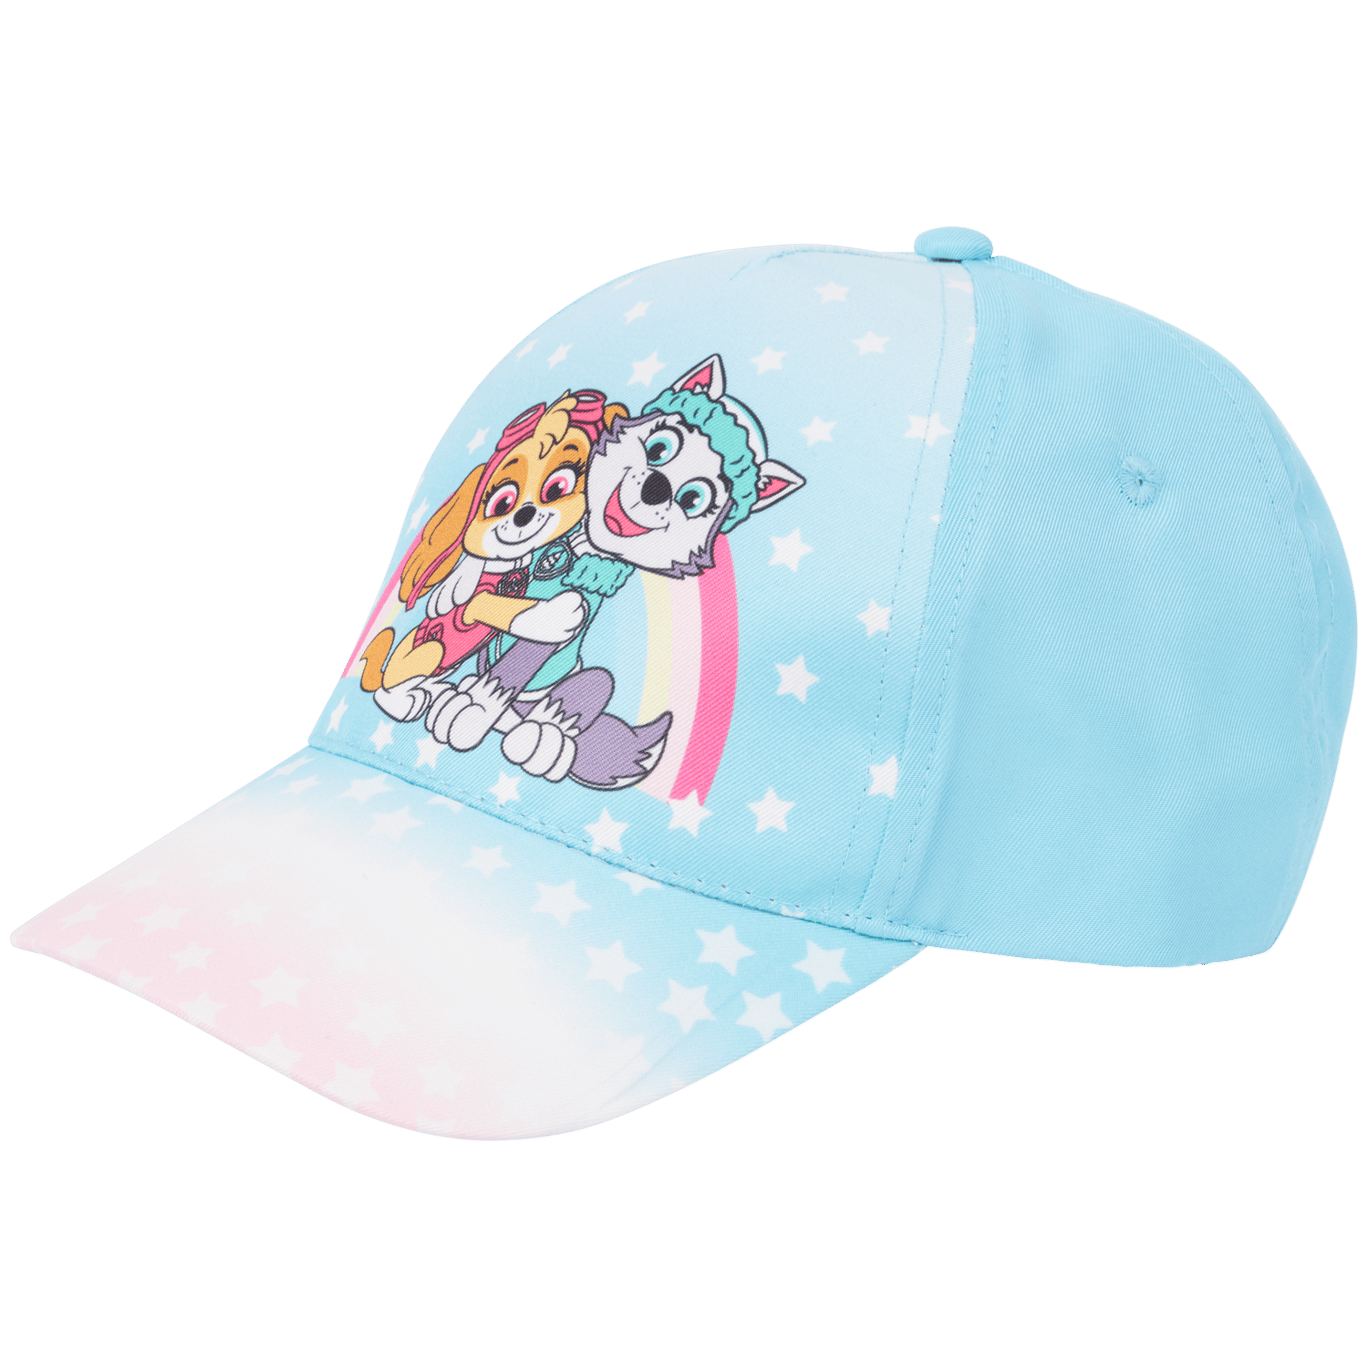 Gorra para niños